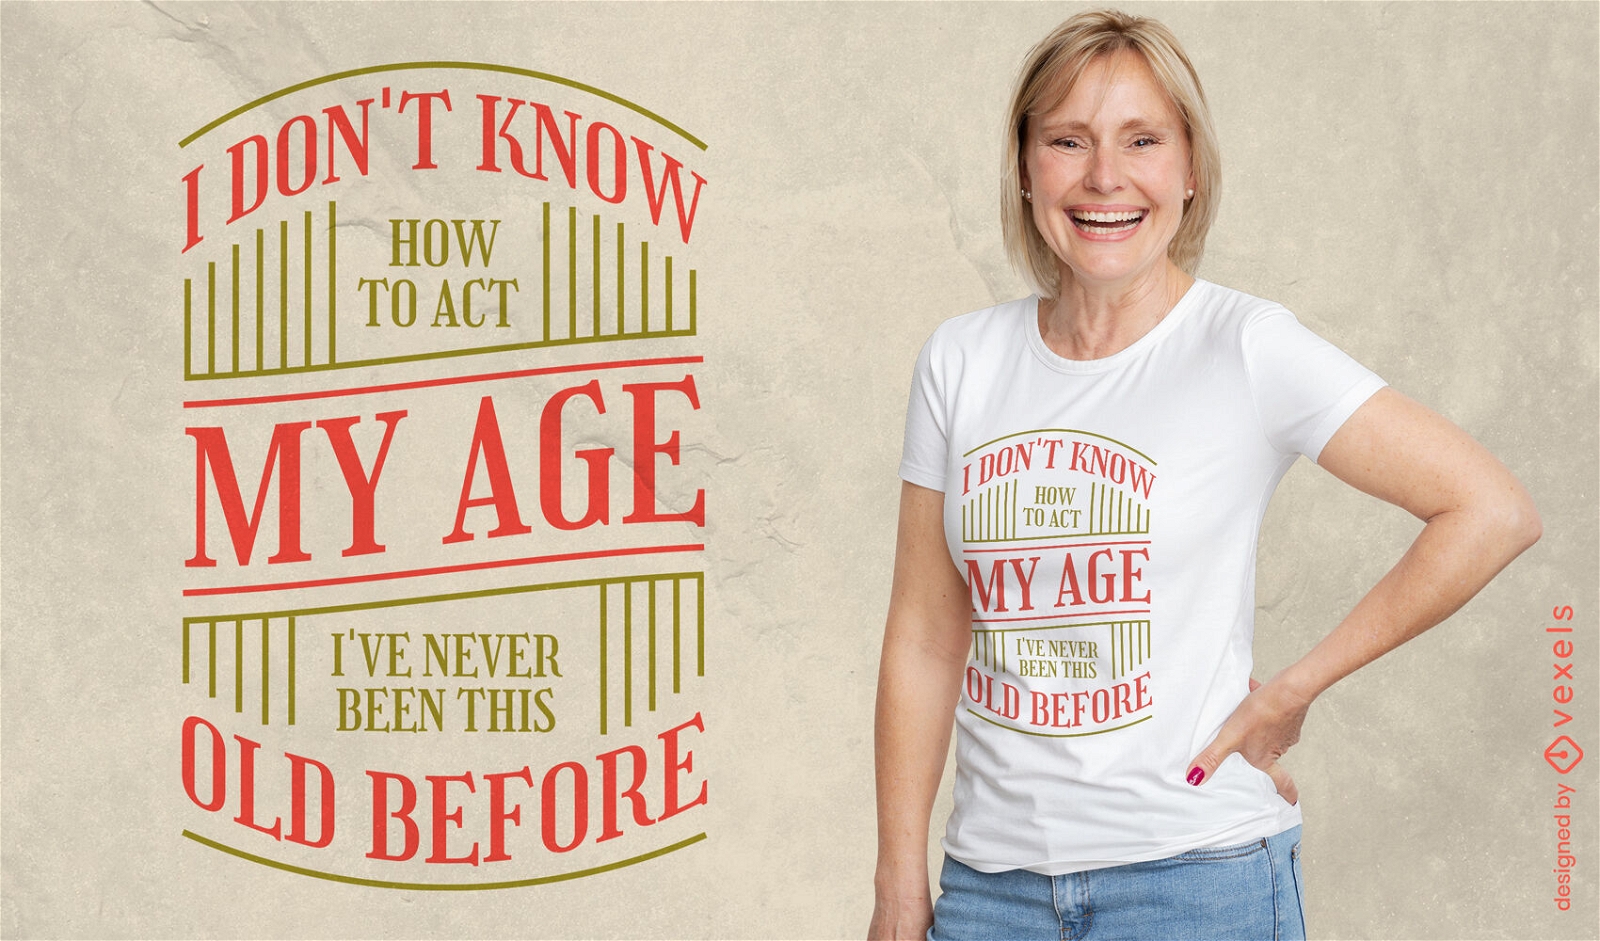 Benimm dich in meinem Alter, lustiges Zitat-T-Shirt-Design